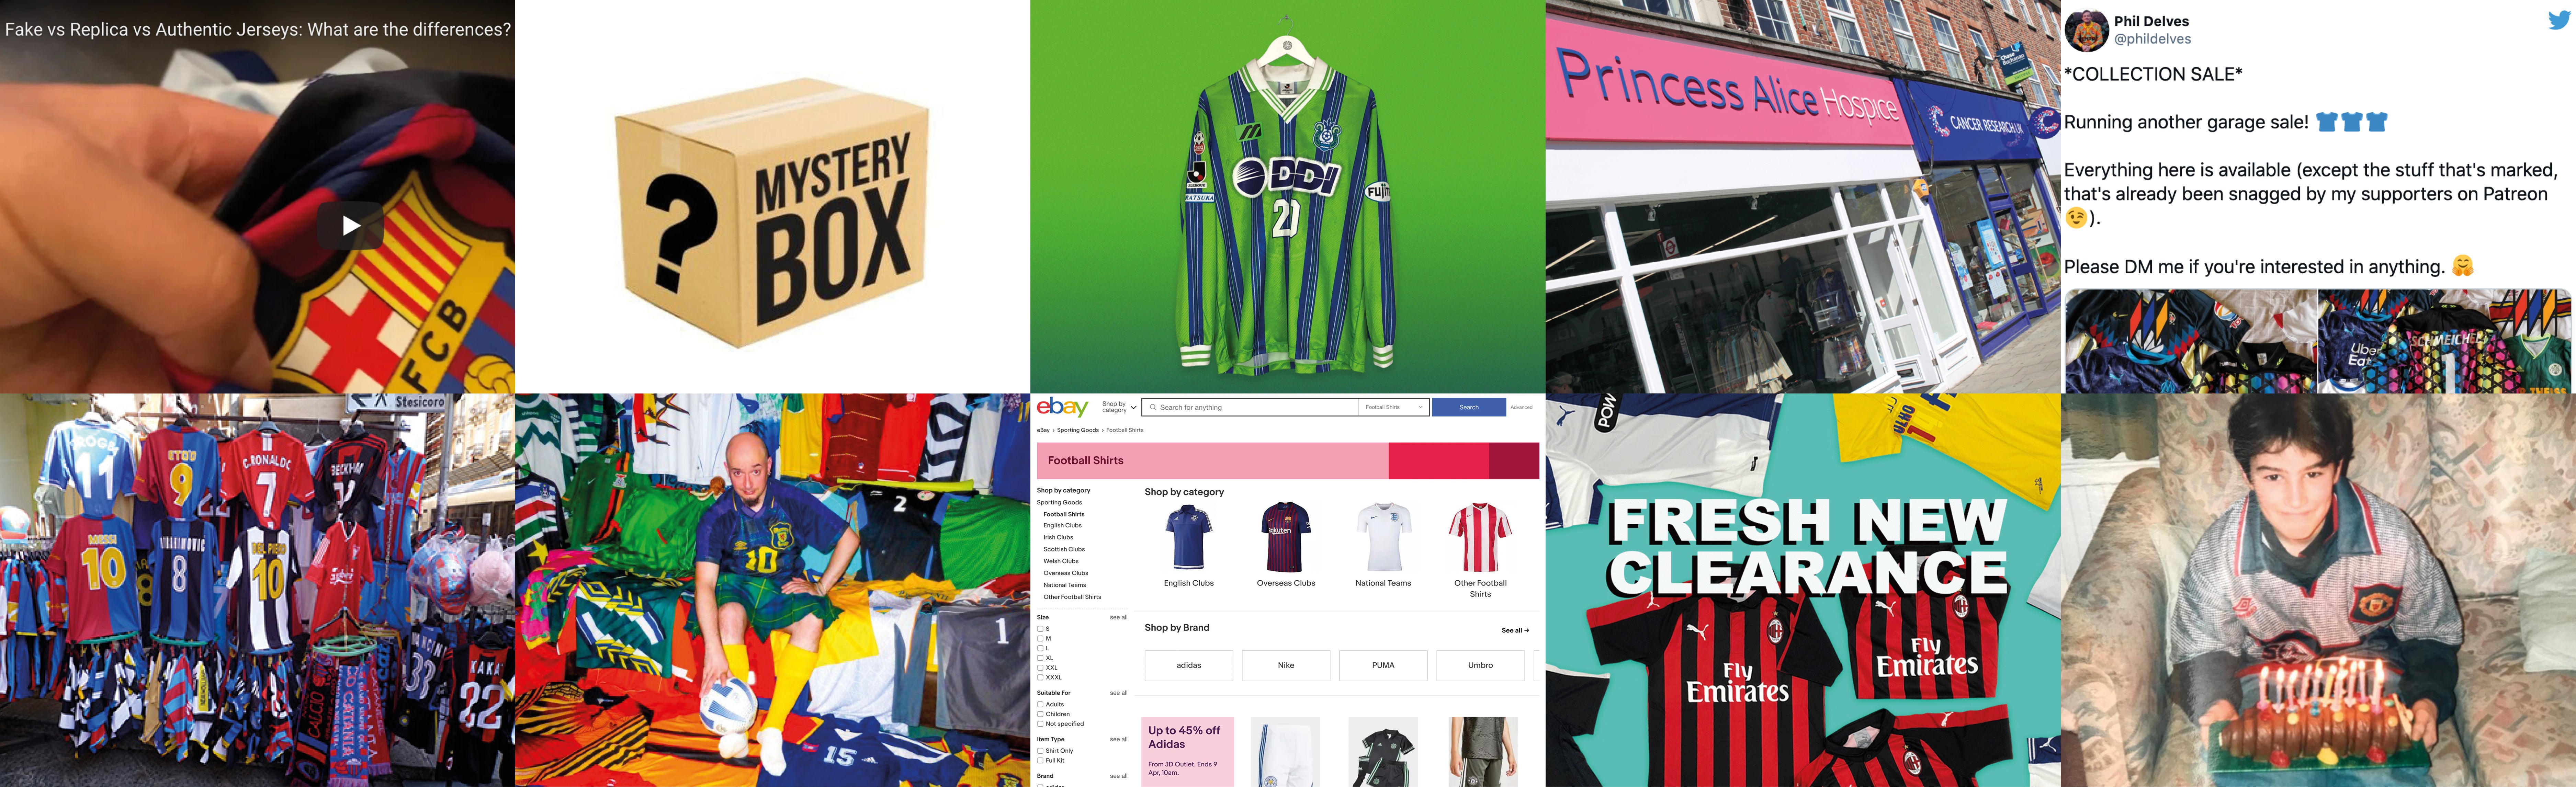 How to spot a fake adidas football shirt - Football Shirt Collective